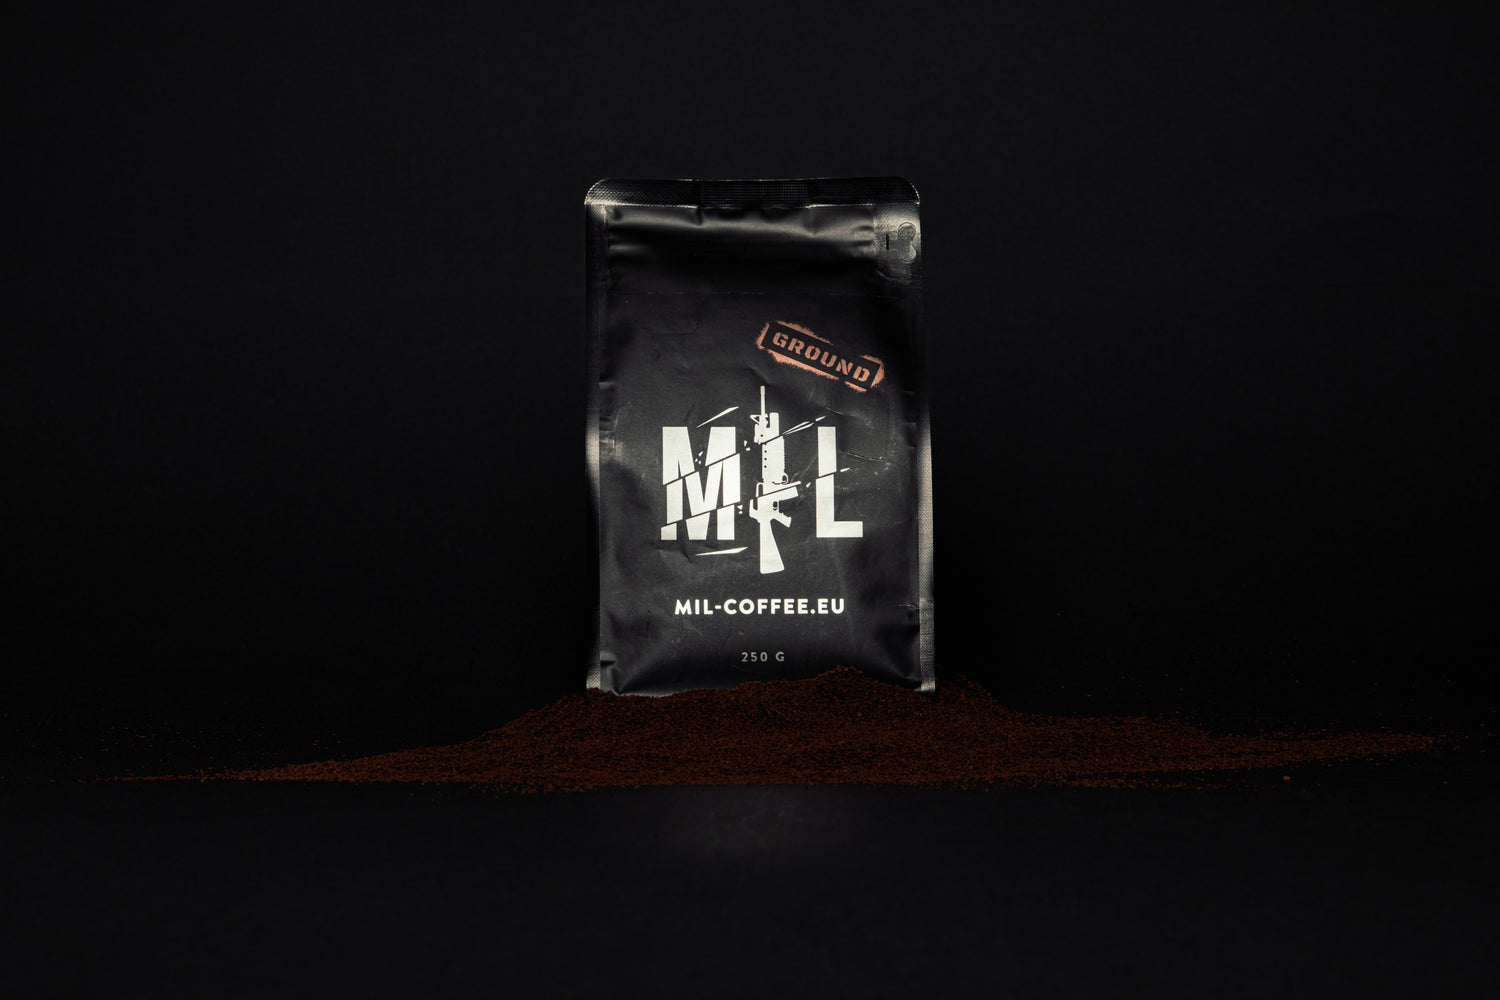 MIL-COFFEE